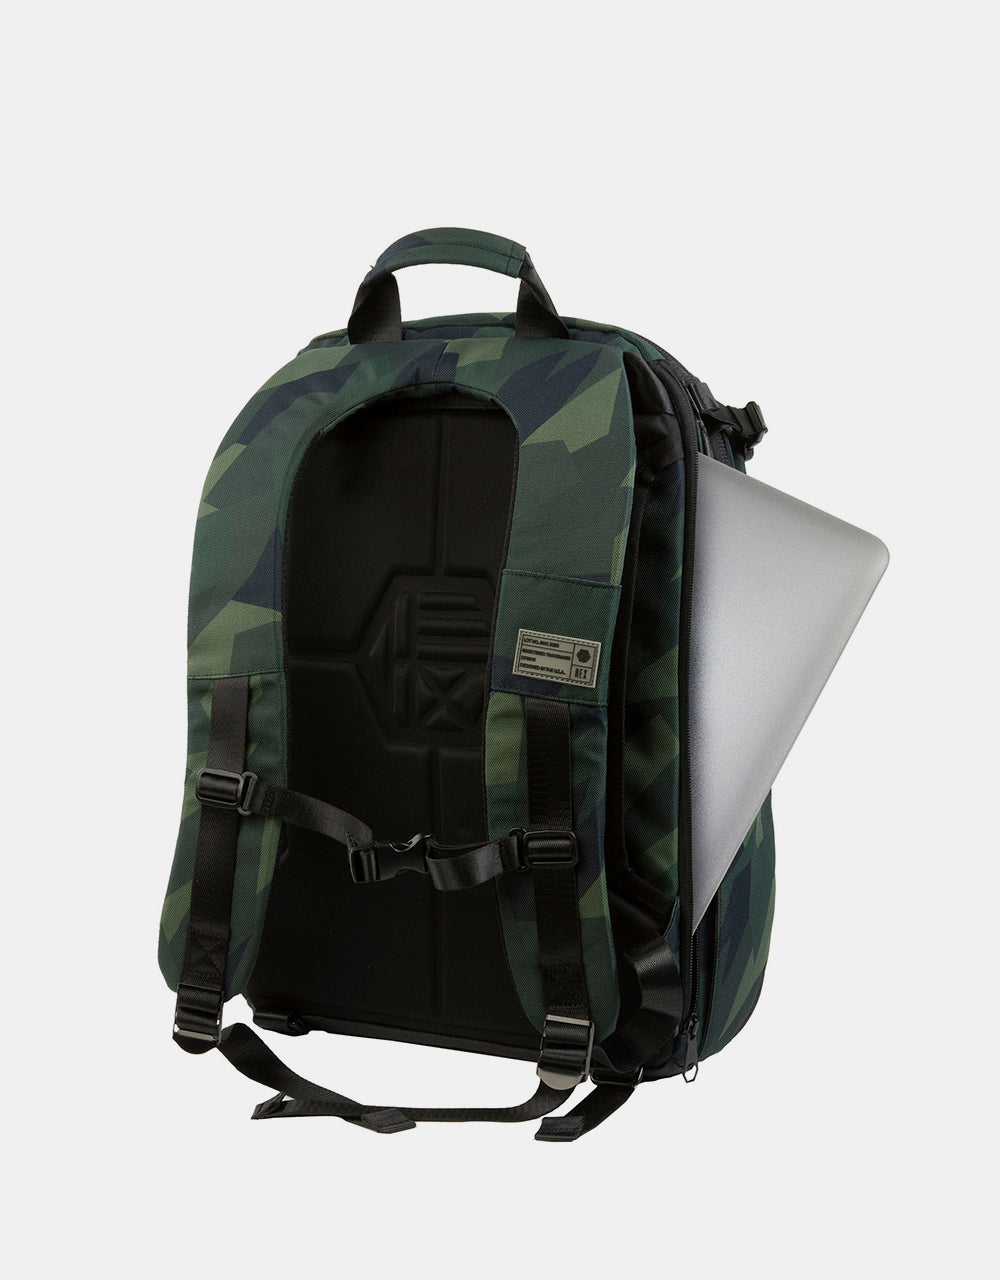 HEX Ranger Clamshell DSLR Backpack - Grey Camo